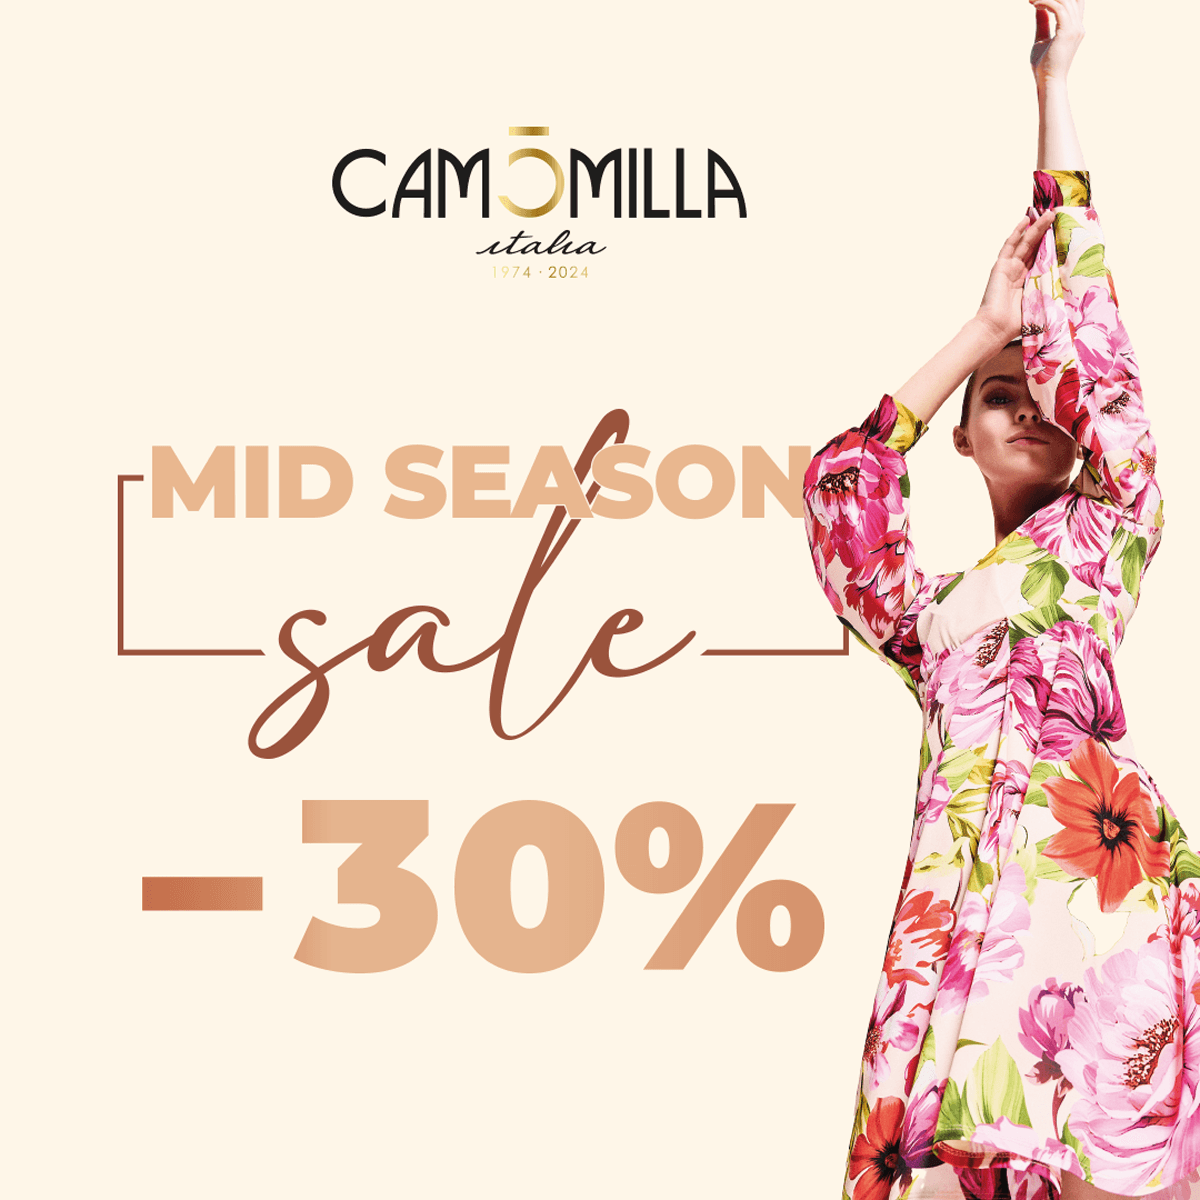 MID SEASON SALE -30% Camomilla Italia